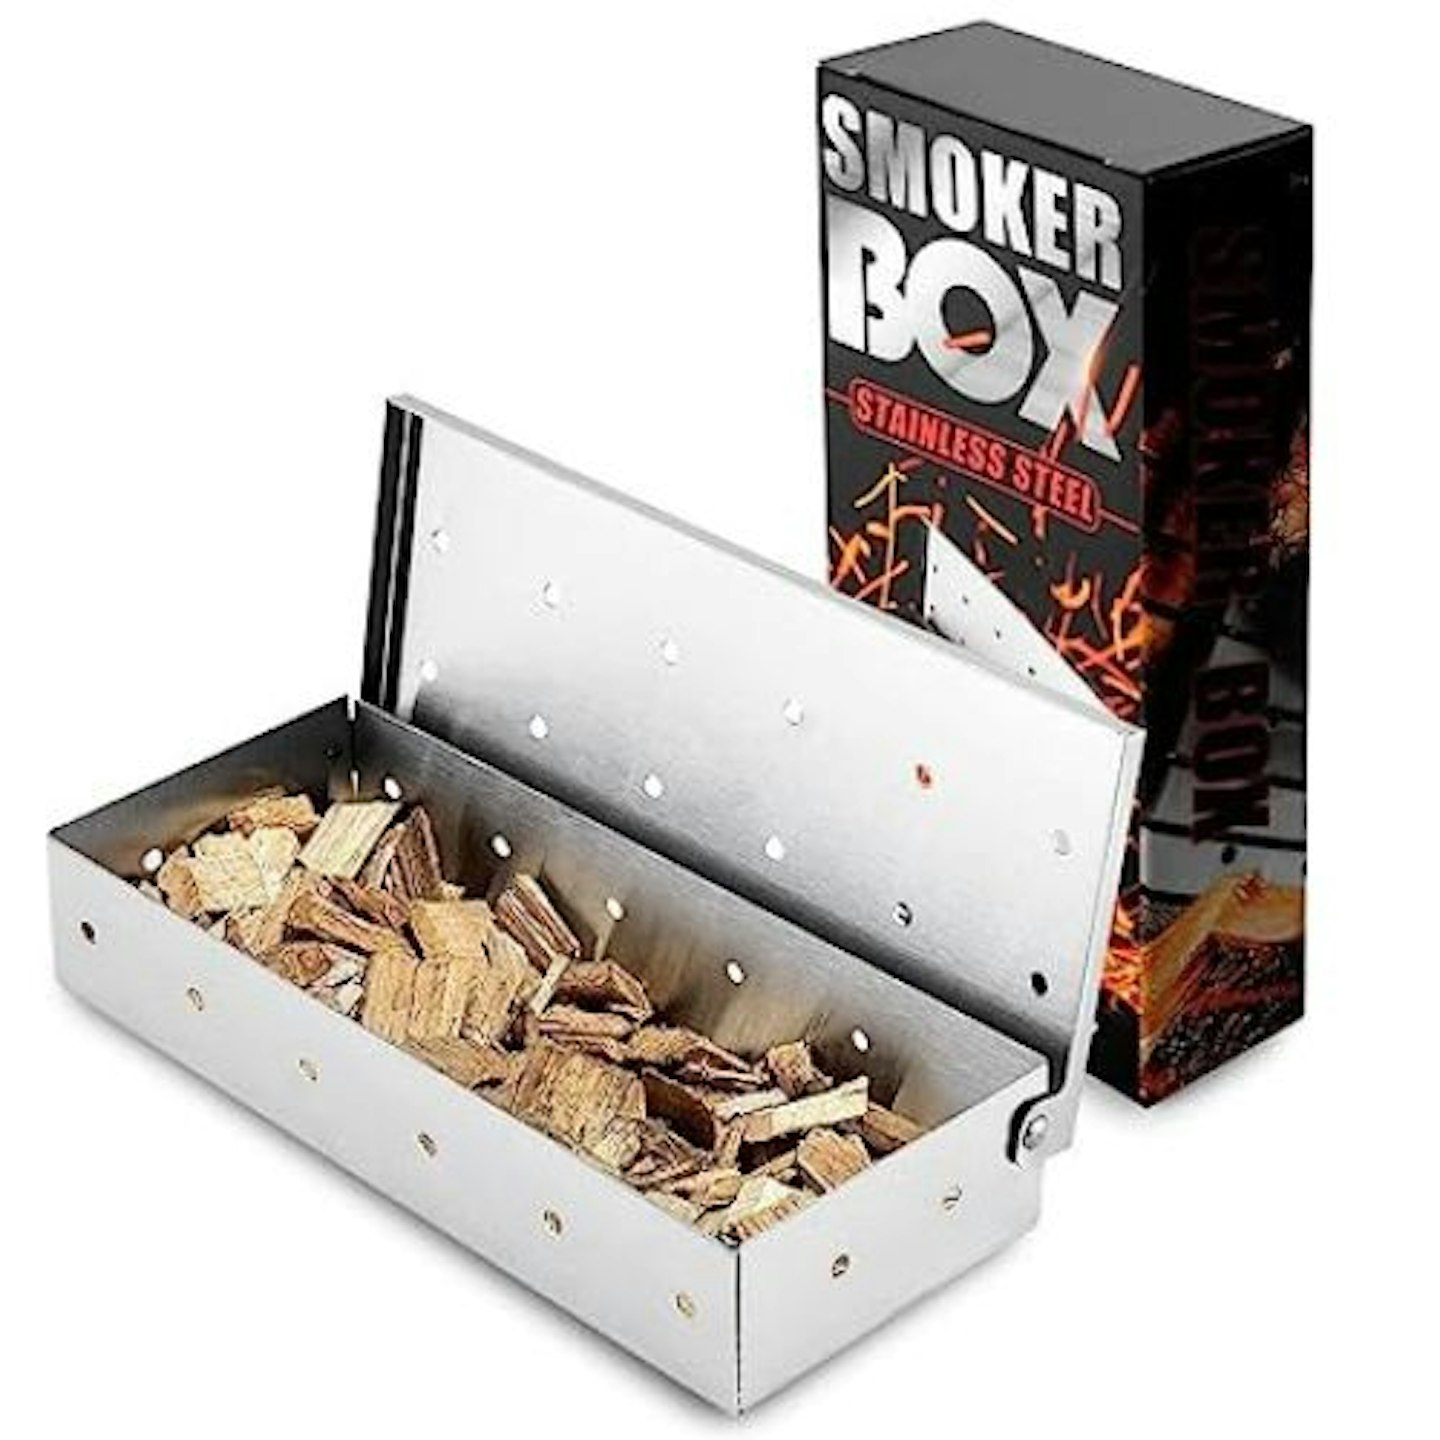 RoseFlower BBQ Smoker Box